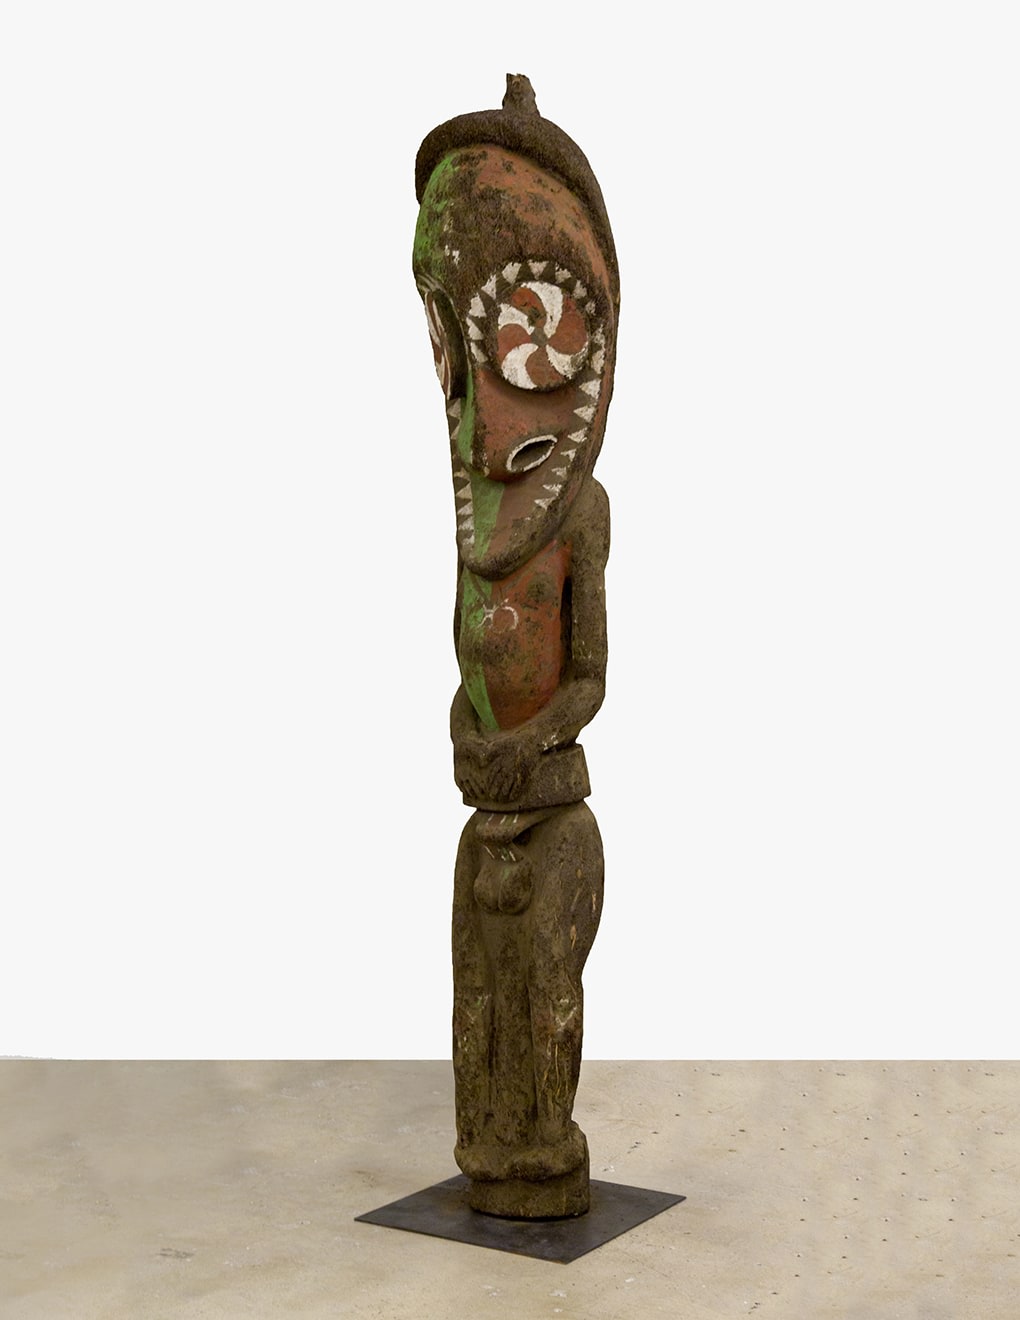 Vanuatu Fern Figure, Ambrym Island early 20th century